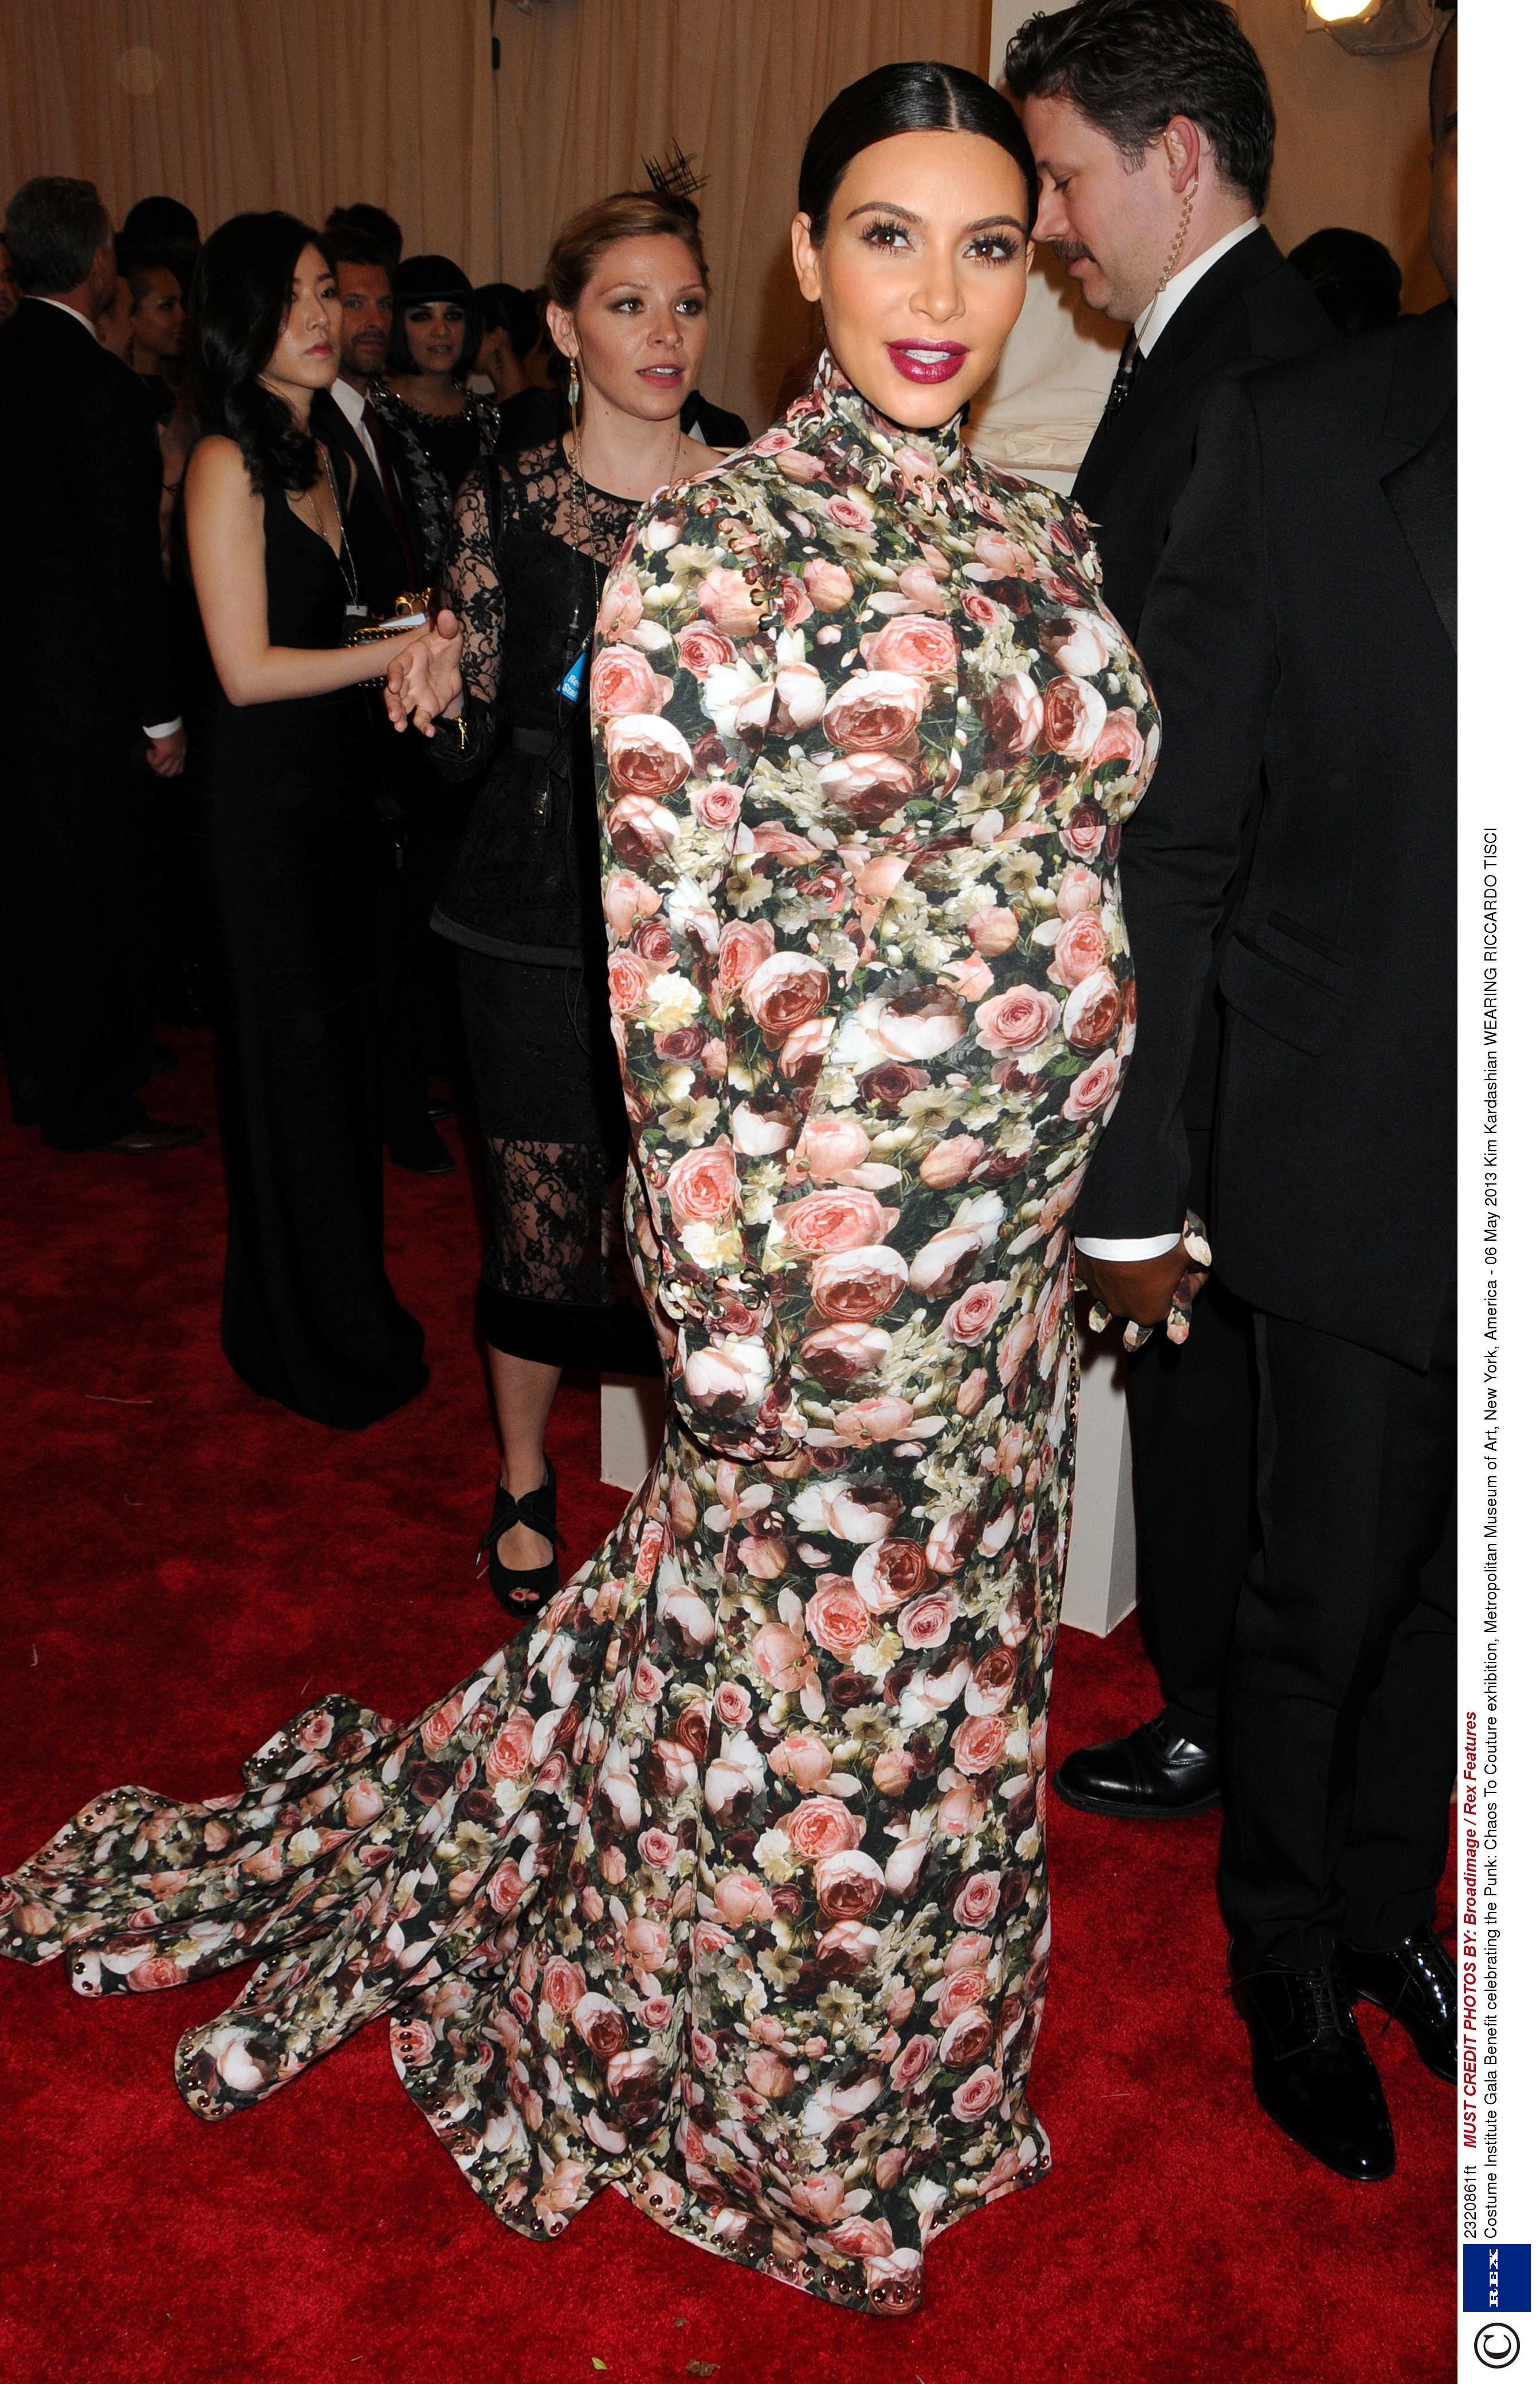 Robin Williams Mocks Kim Kardashian's Met Gala Gown – The